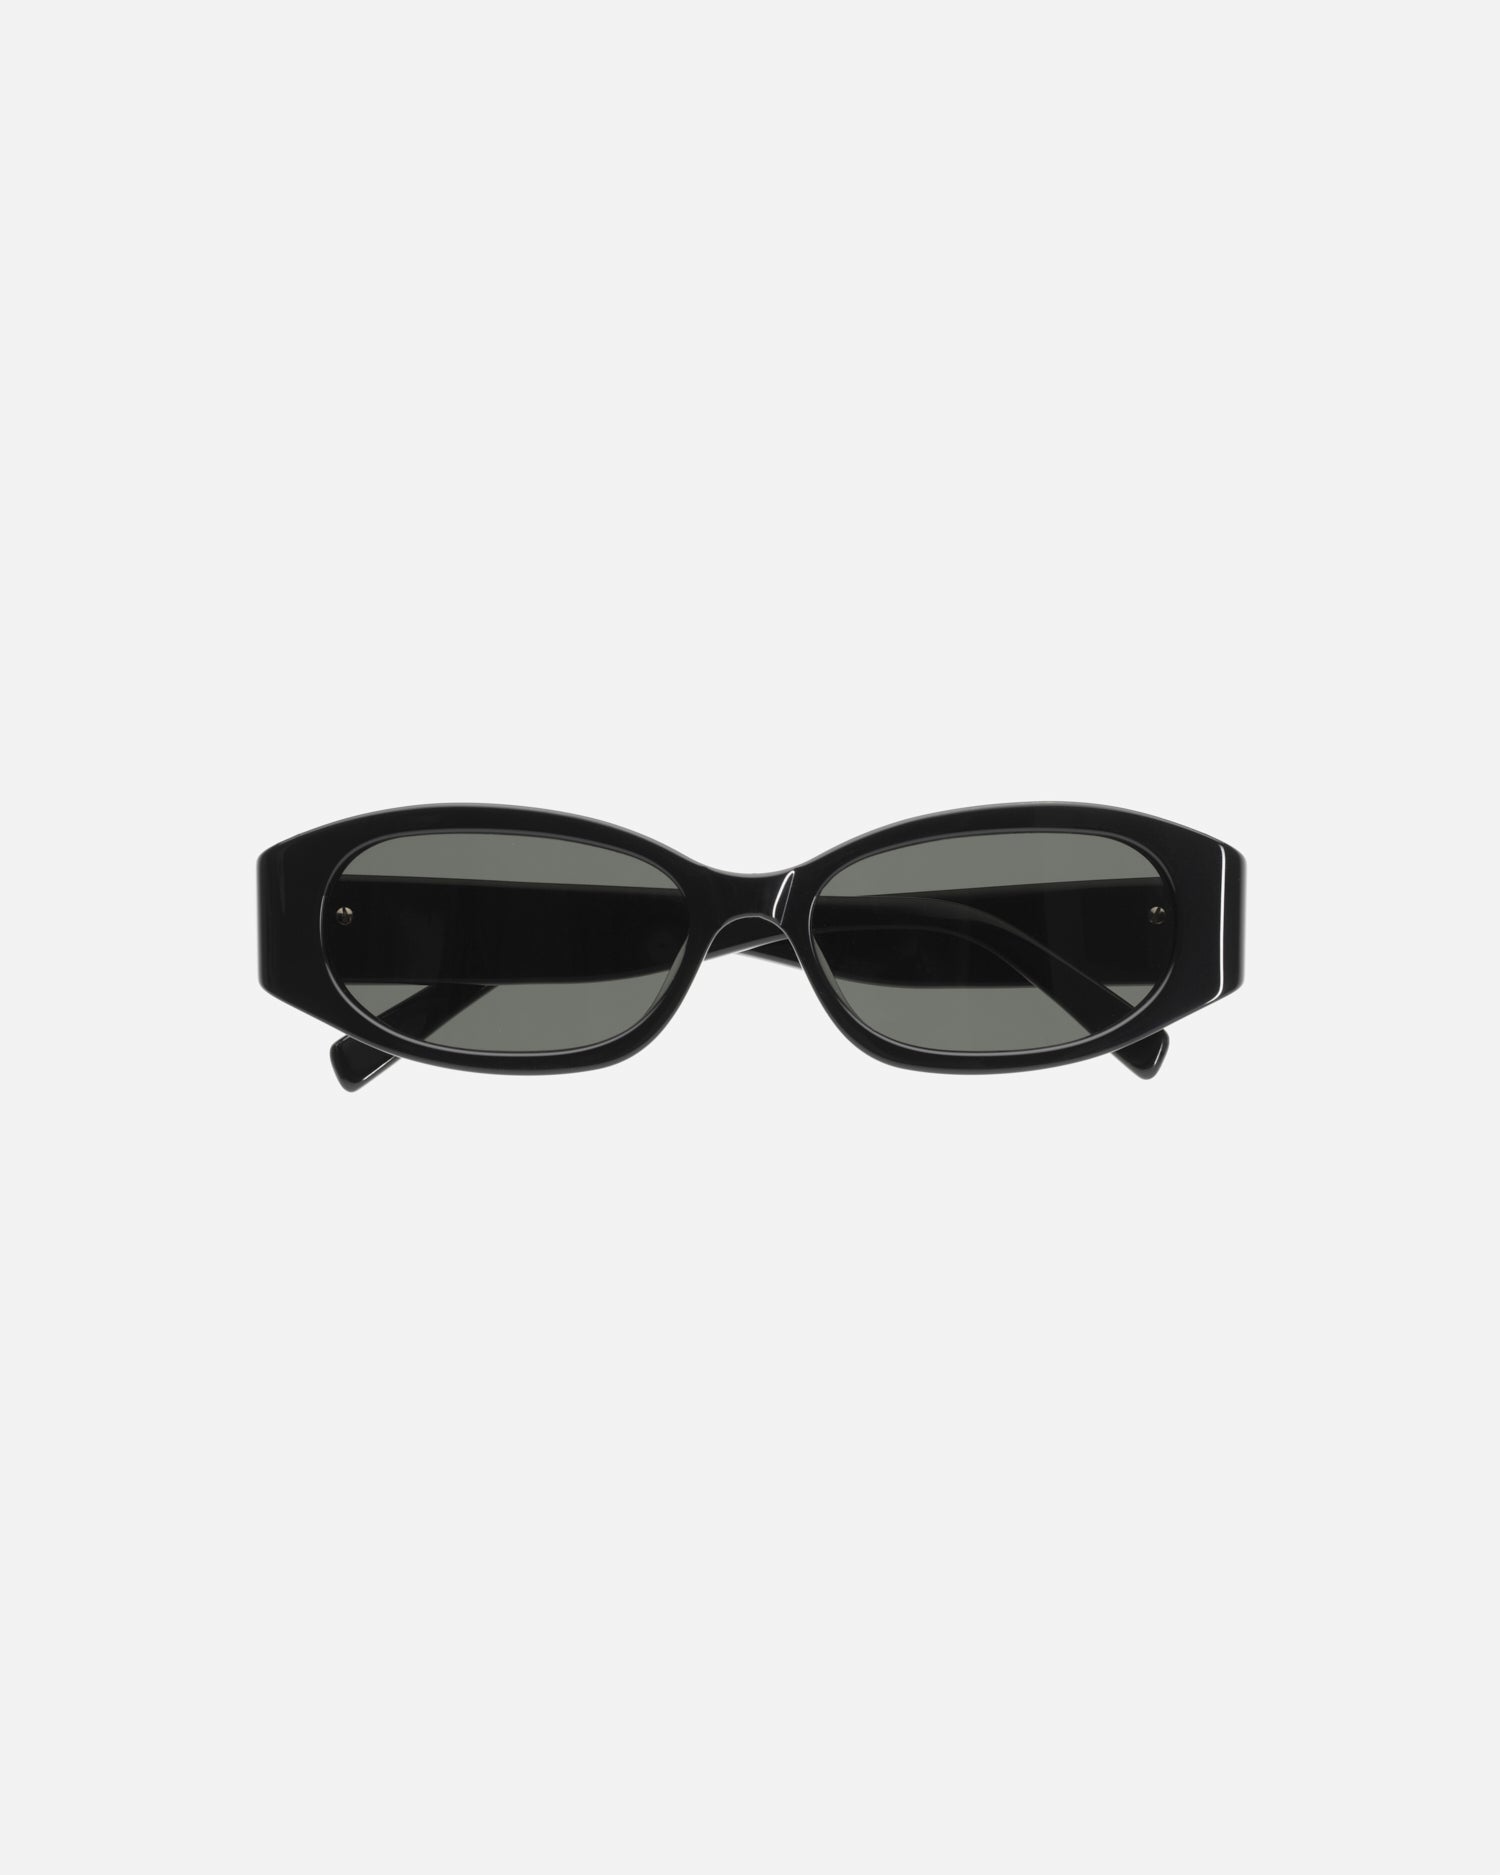 Momentum luxe sunglasses by Velvet Canyon in Black